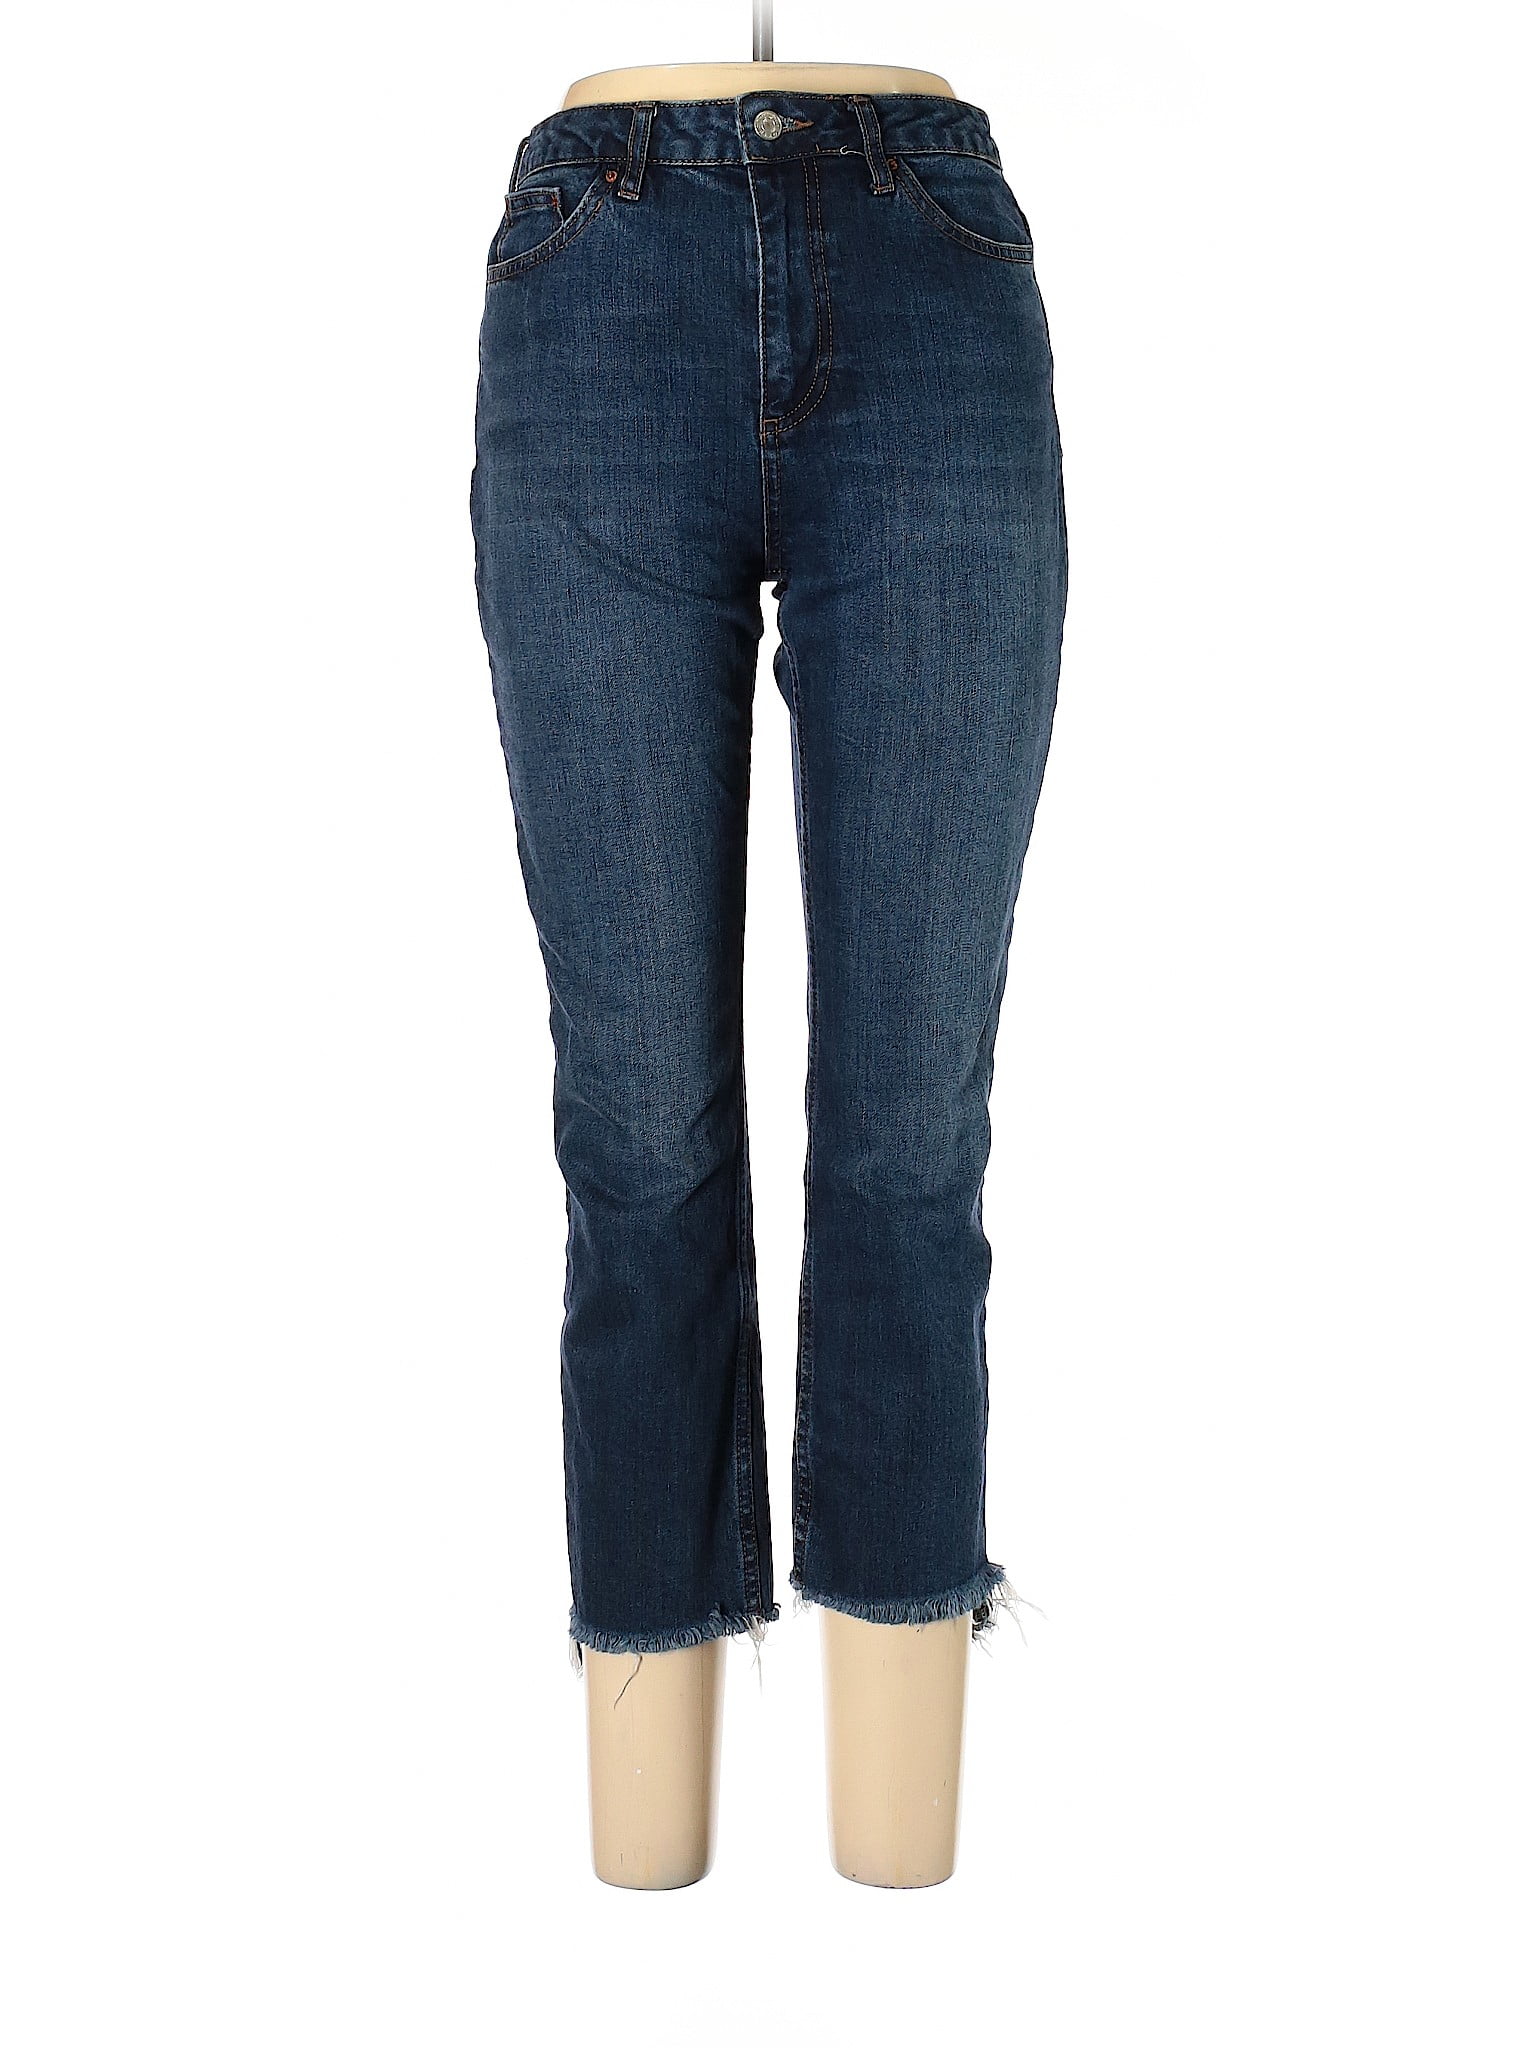 TOPSHOP - Pre-Owned Topshop Women's Size 30W Jeans - Walmart.com ...